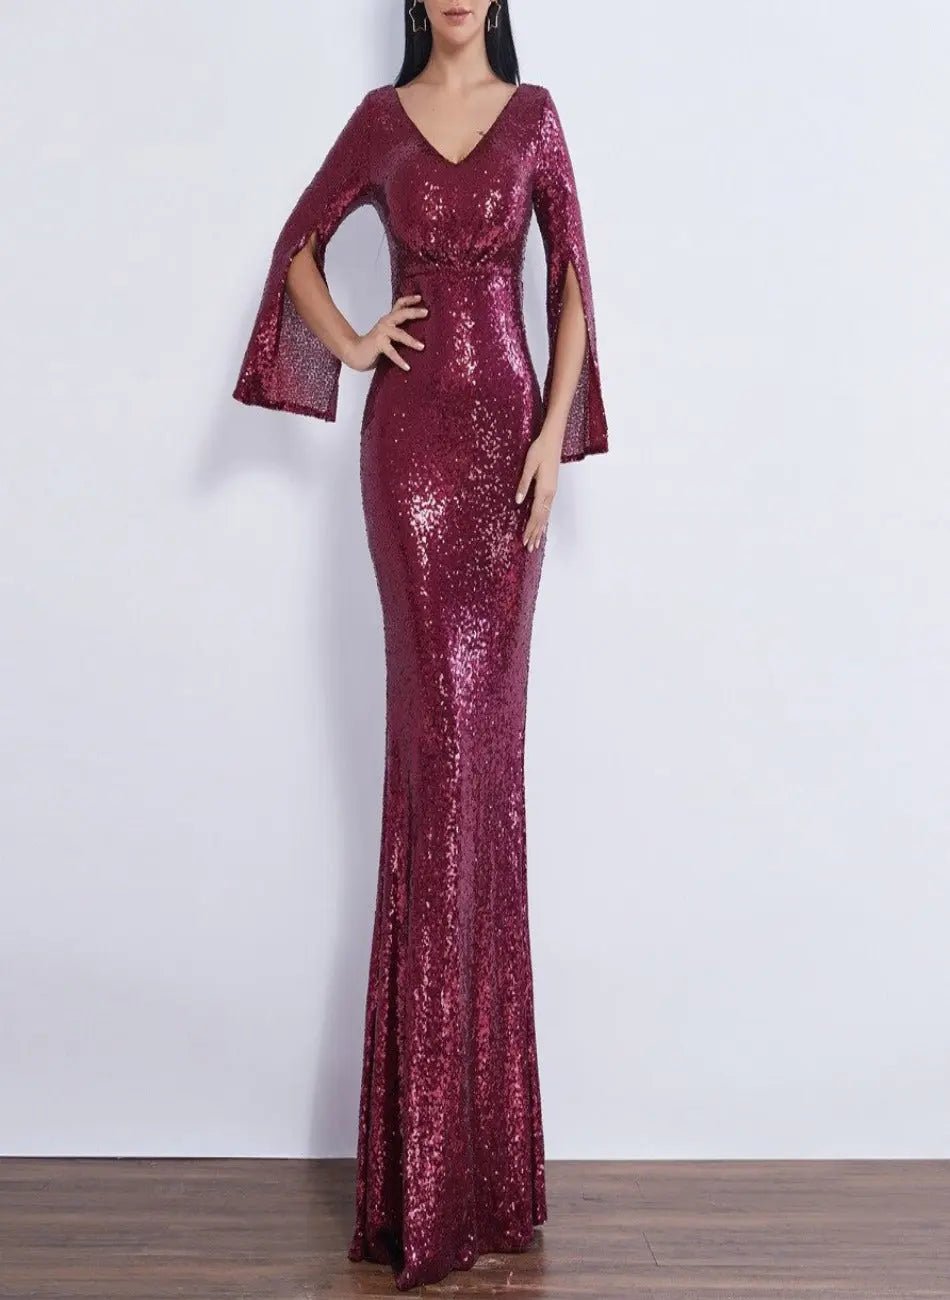 Farah Shinny Sequin Long Evening dress - Mscooco.co.uk